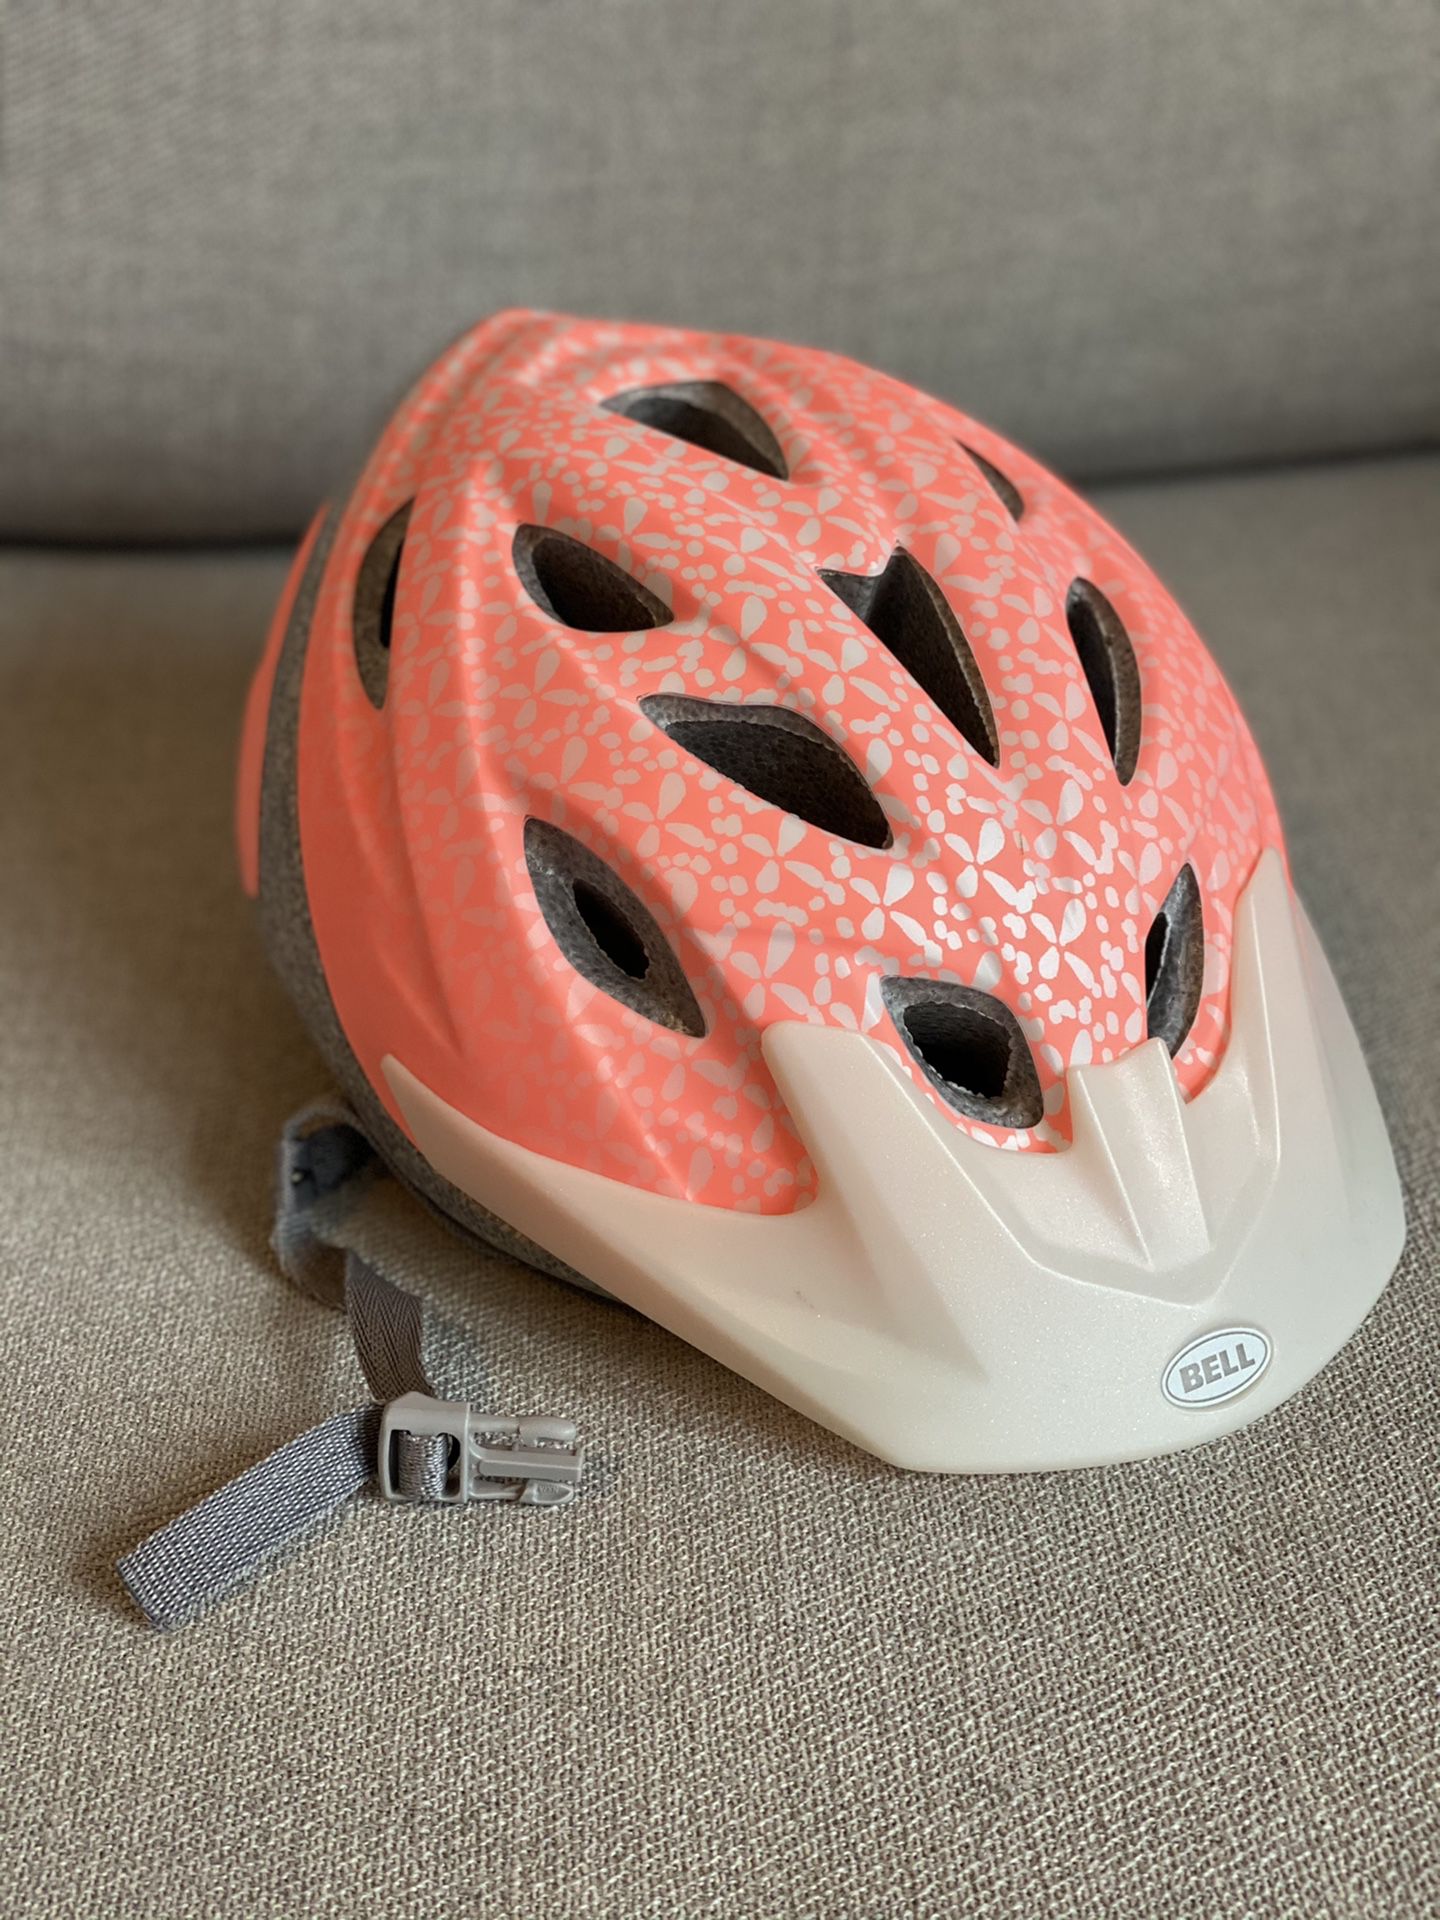 Pink bike helmet - used twice